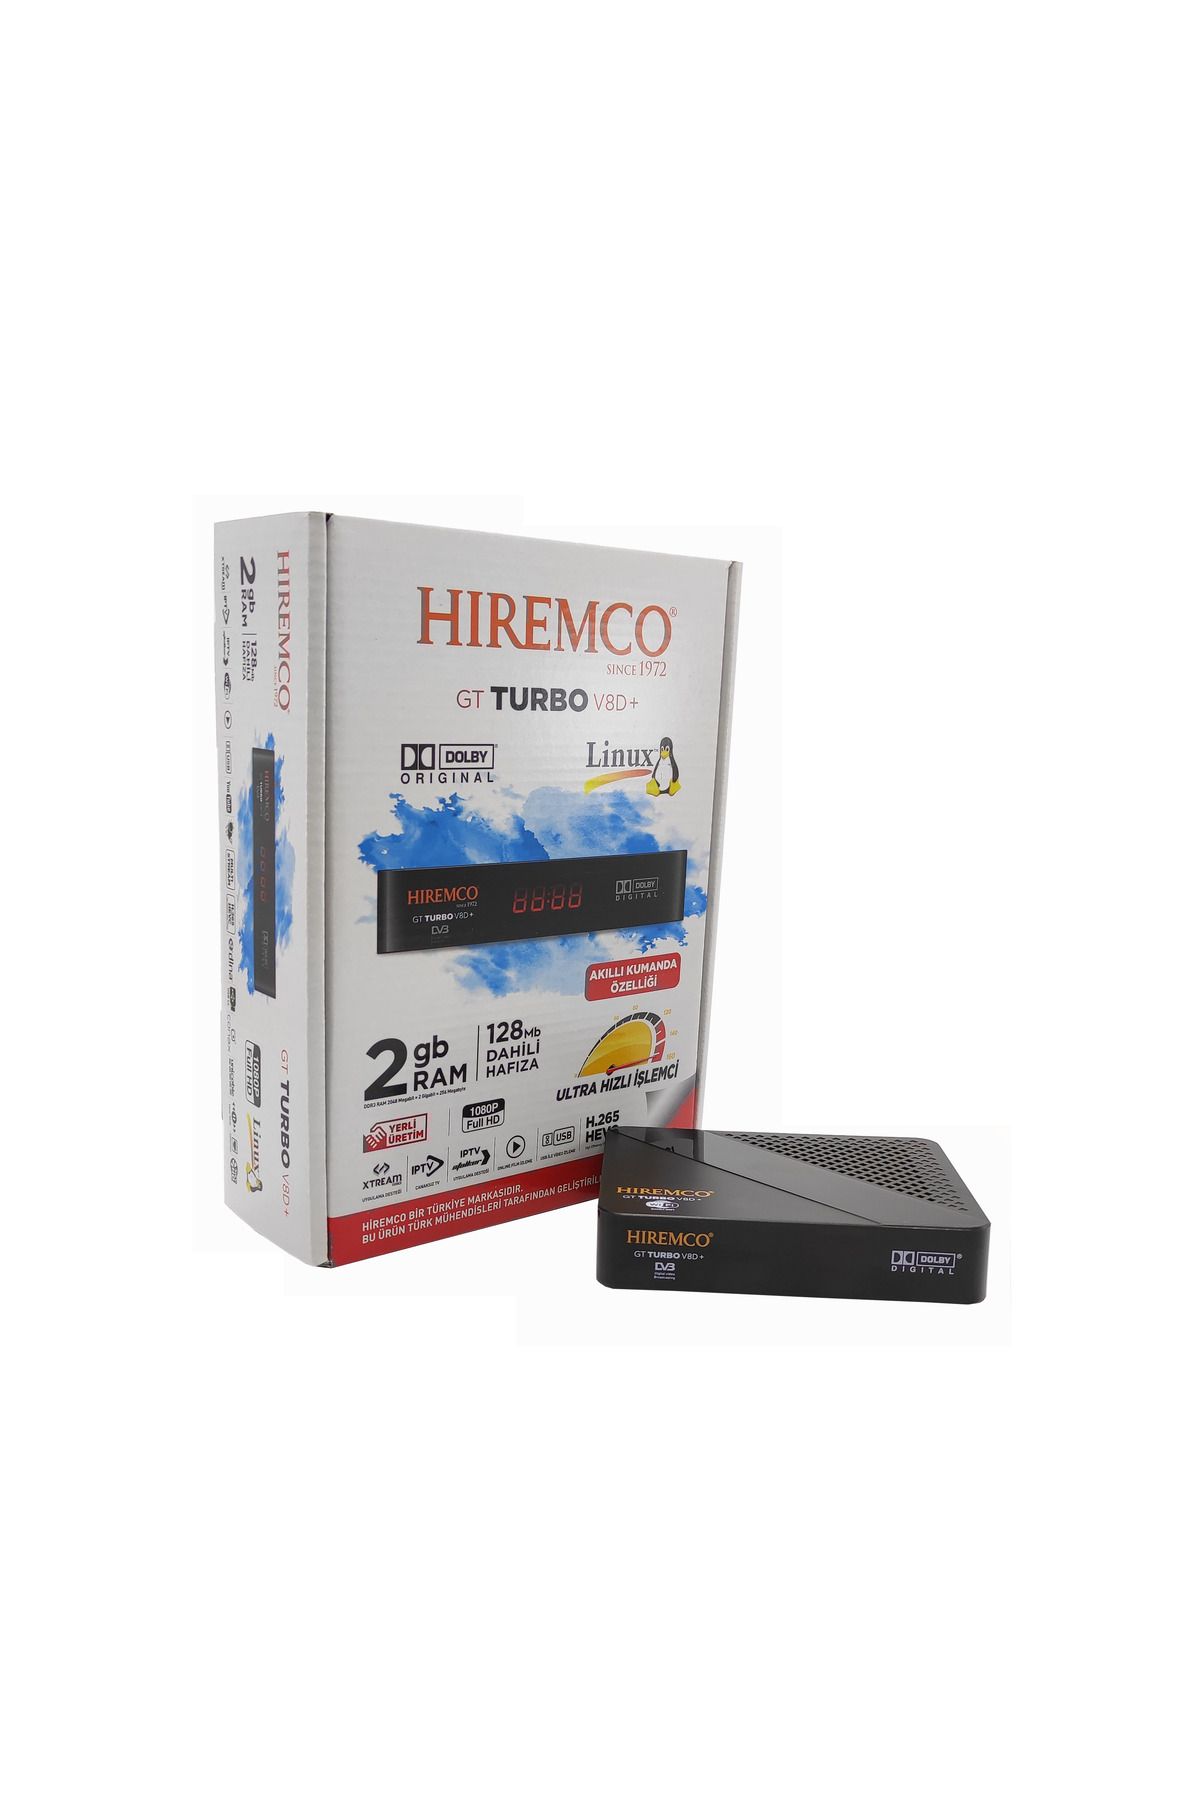 Hiremco Gt Turbo V8d Hd Plus Ethernetli Lınux Tabanlı Dahili Wifi Full Hd Mini Uydu Alıcısı